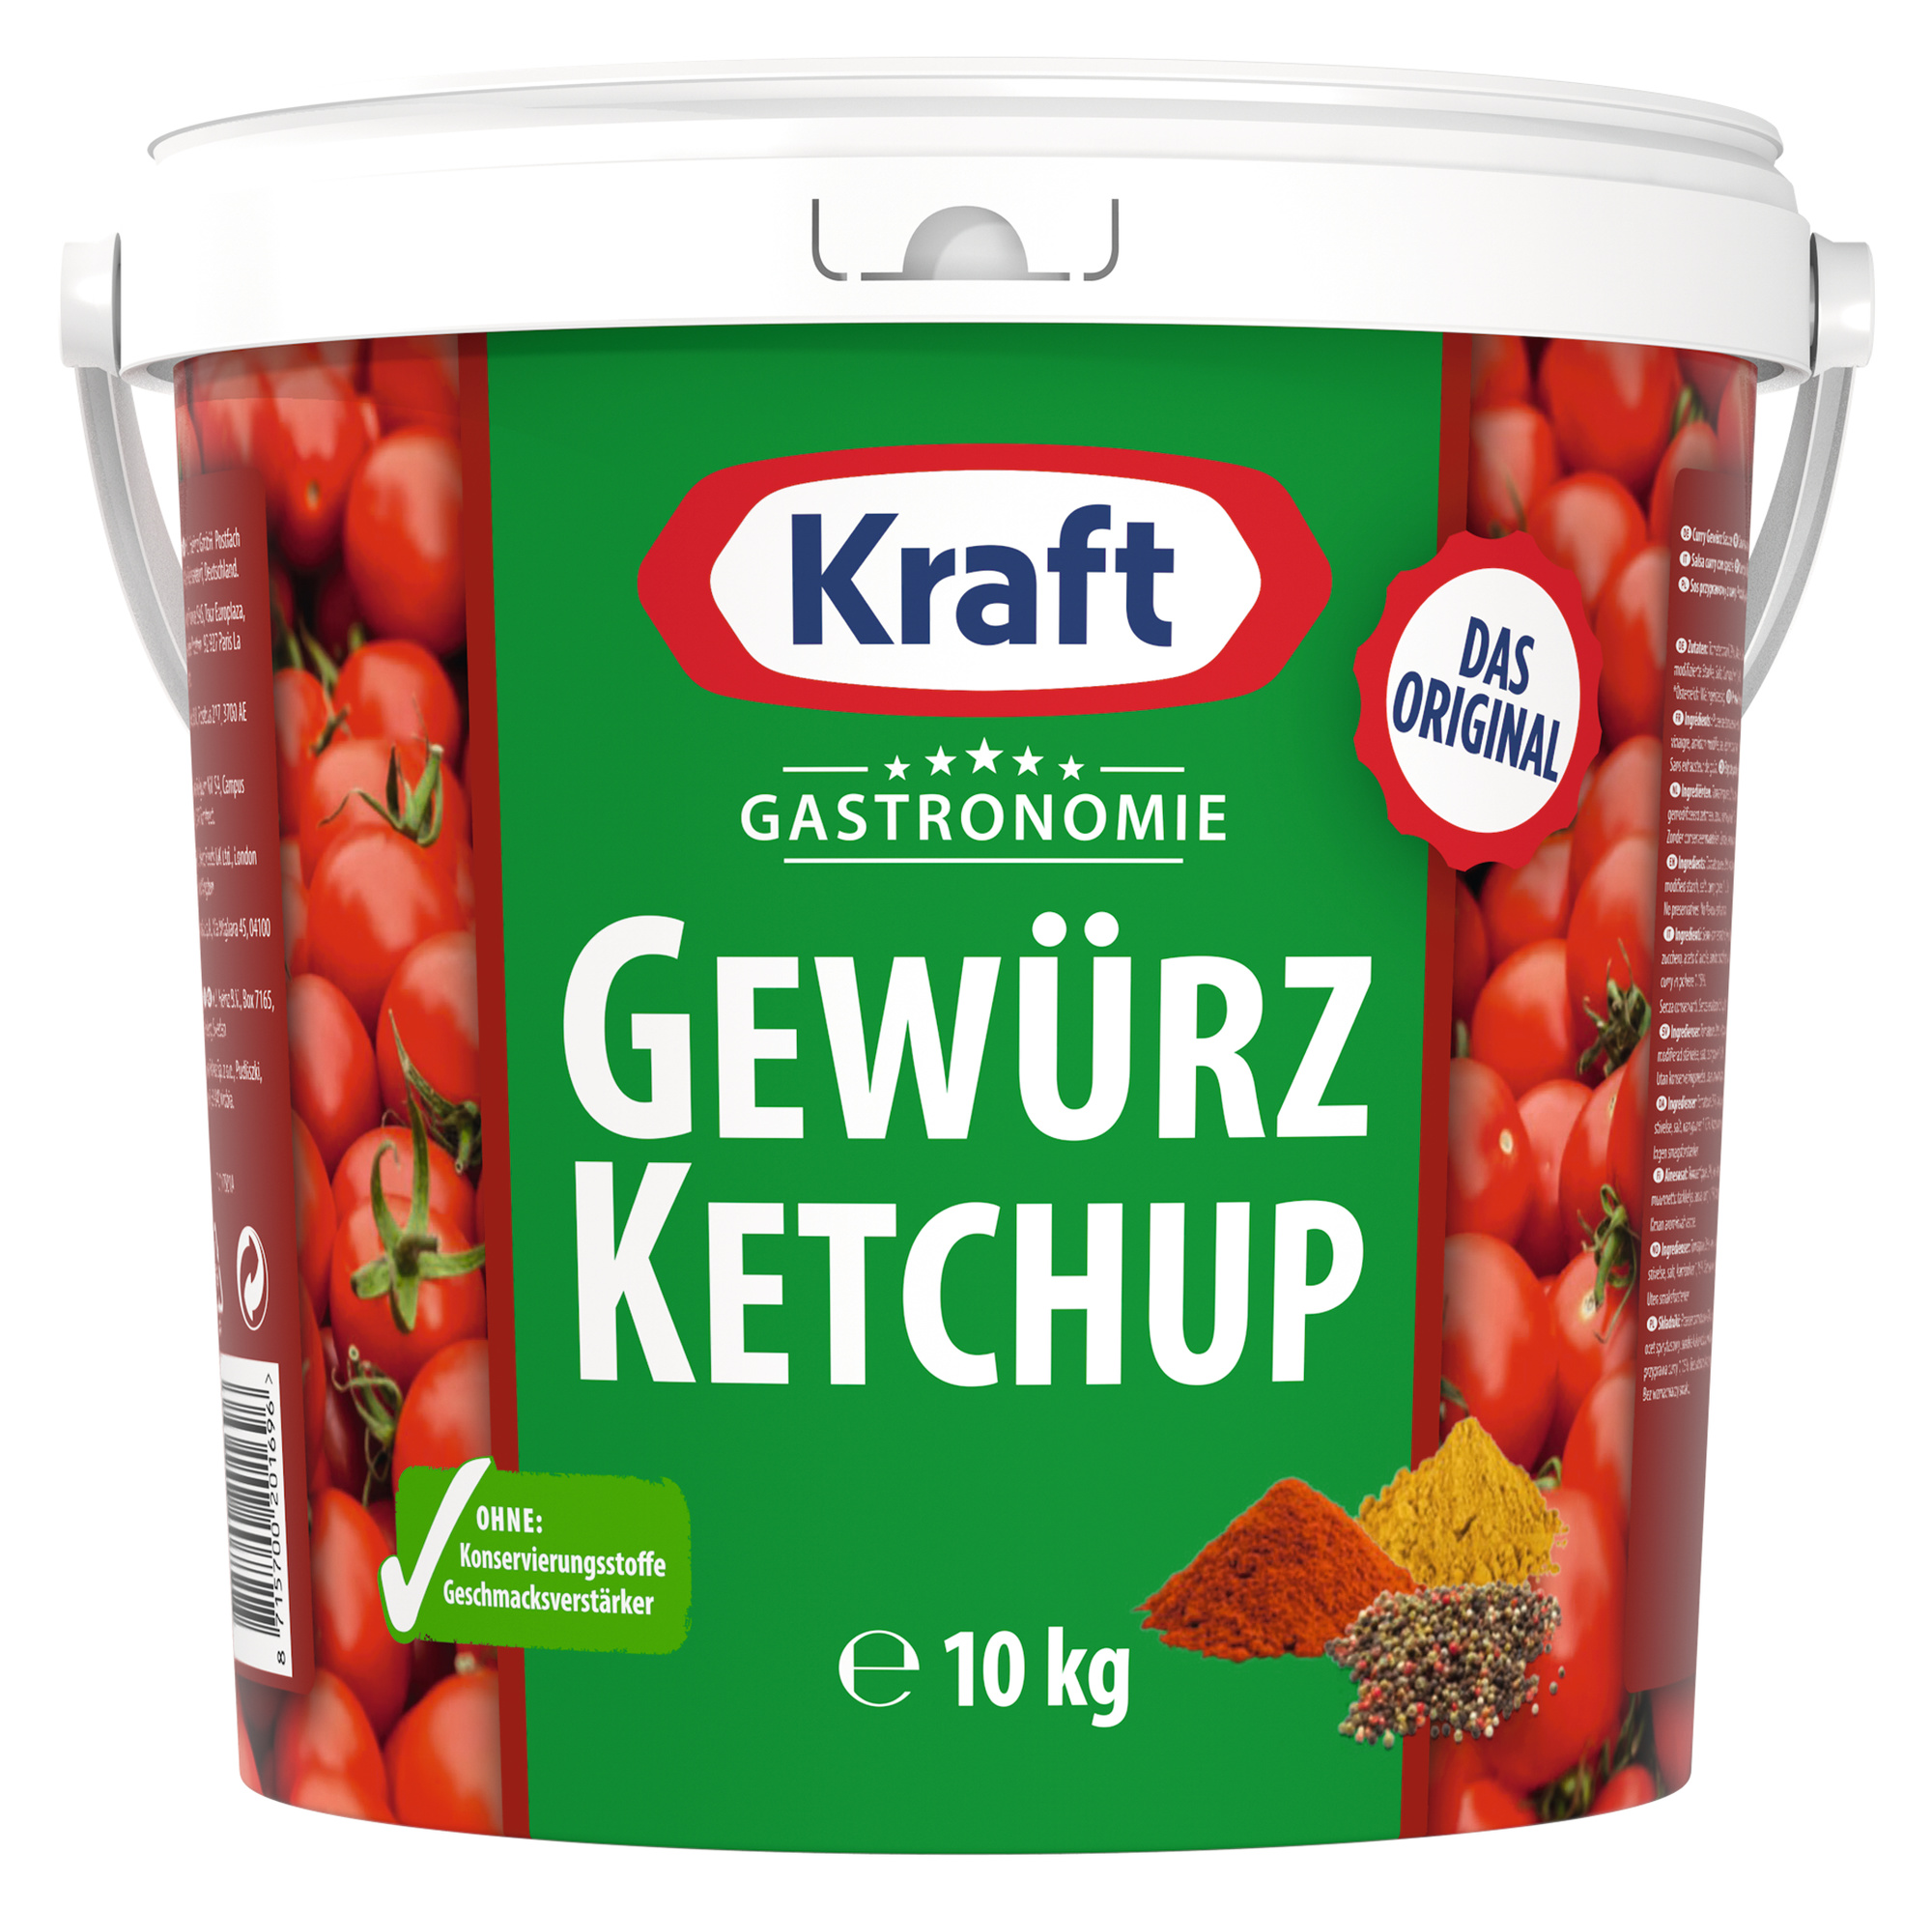 Gewürz Ketchup 10kg